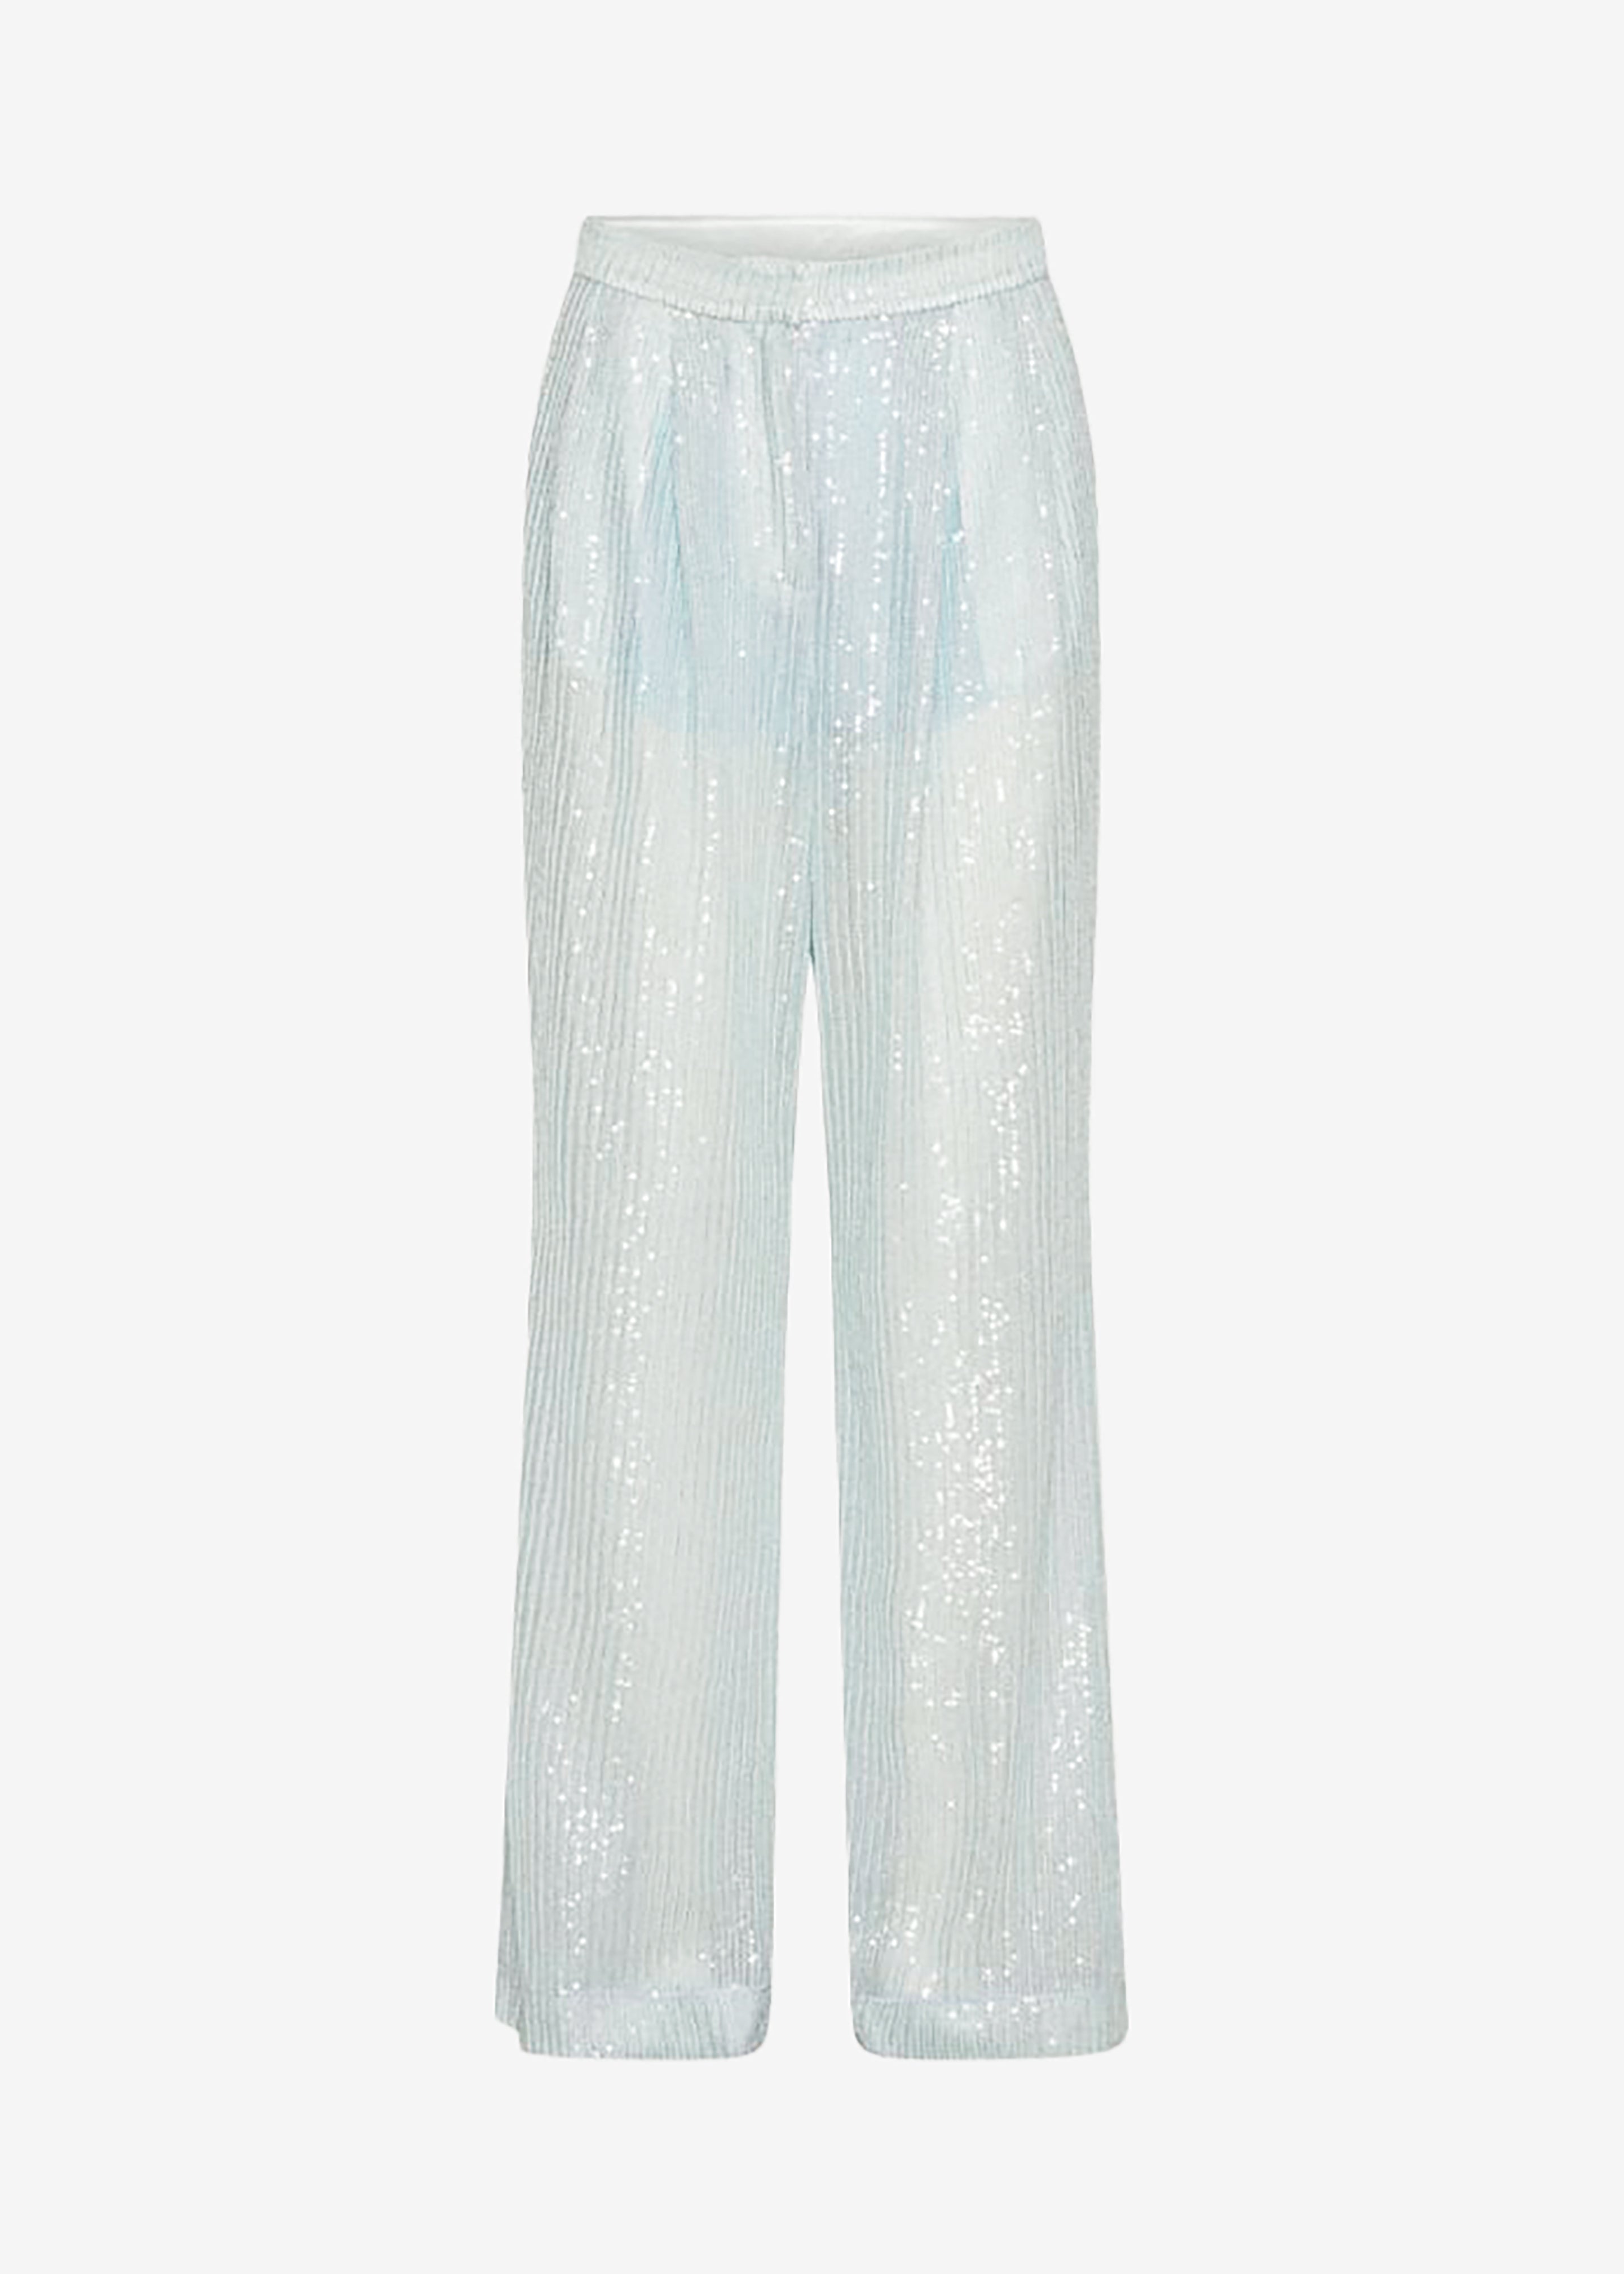 ROTATE Transparent Sequin Low Waist Pants - Light Blue - 8